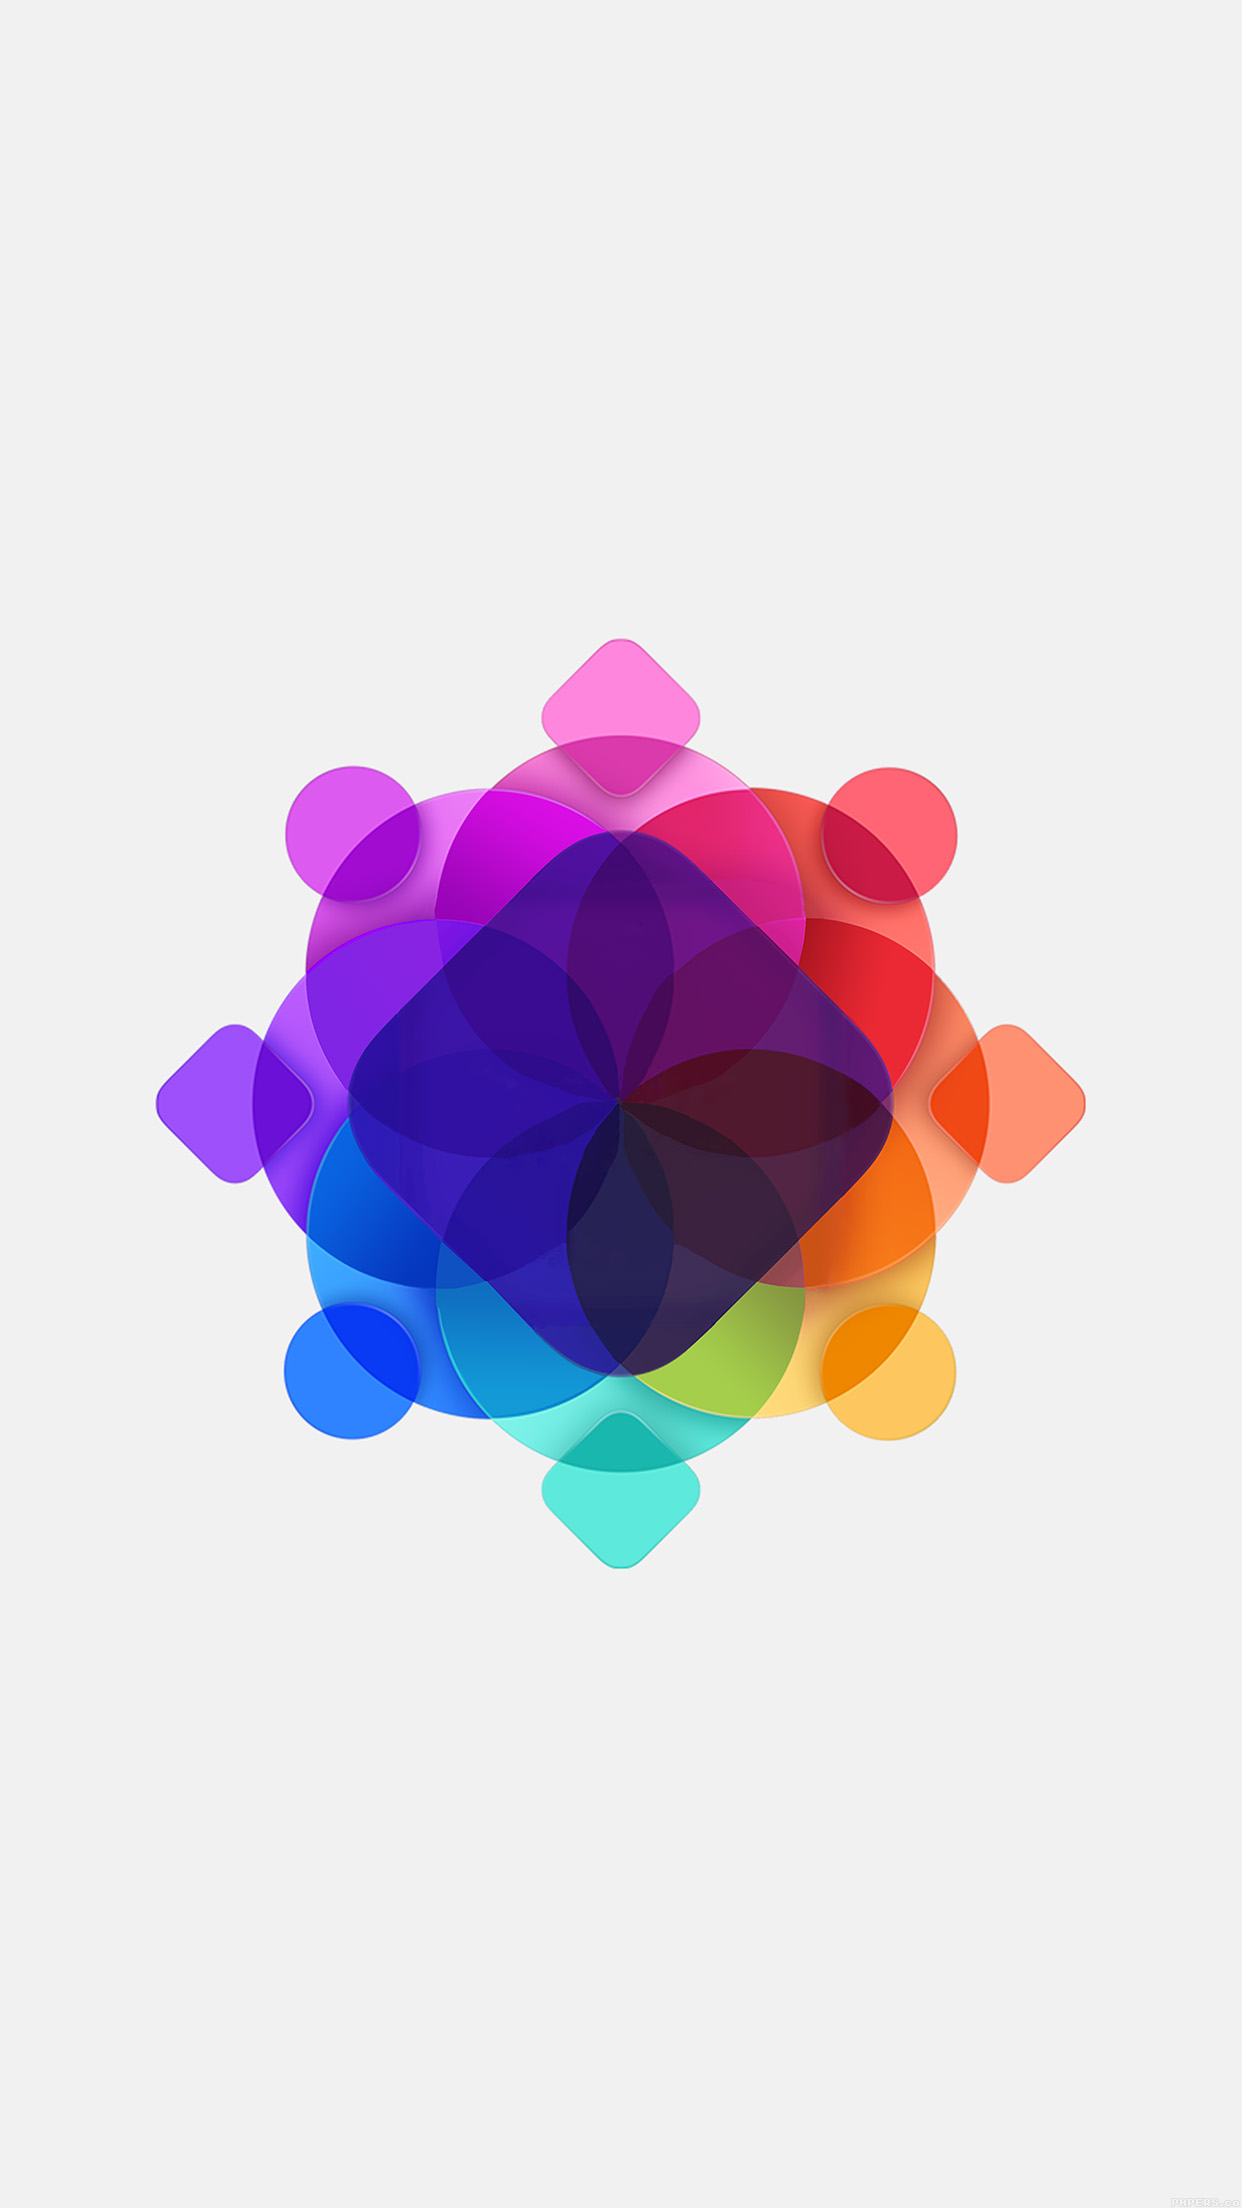 Wwdc 2015 Apple Art Pattern Android wallpaper